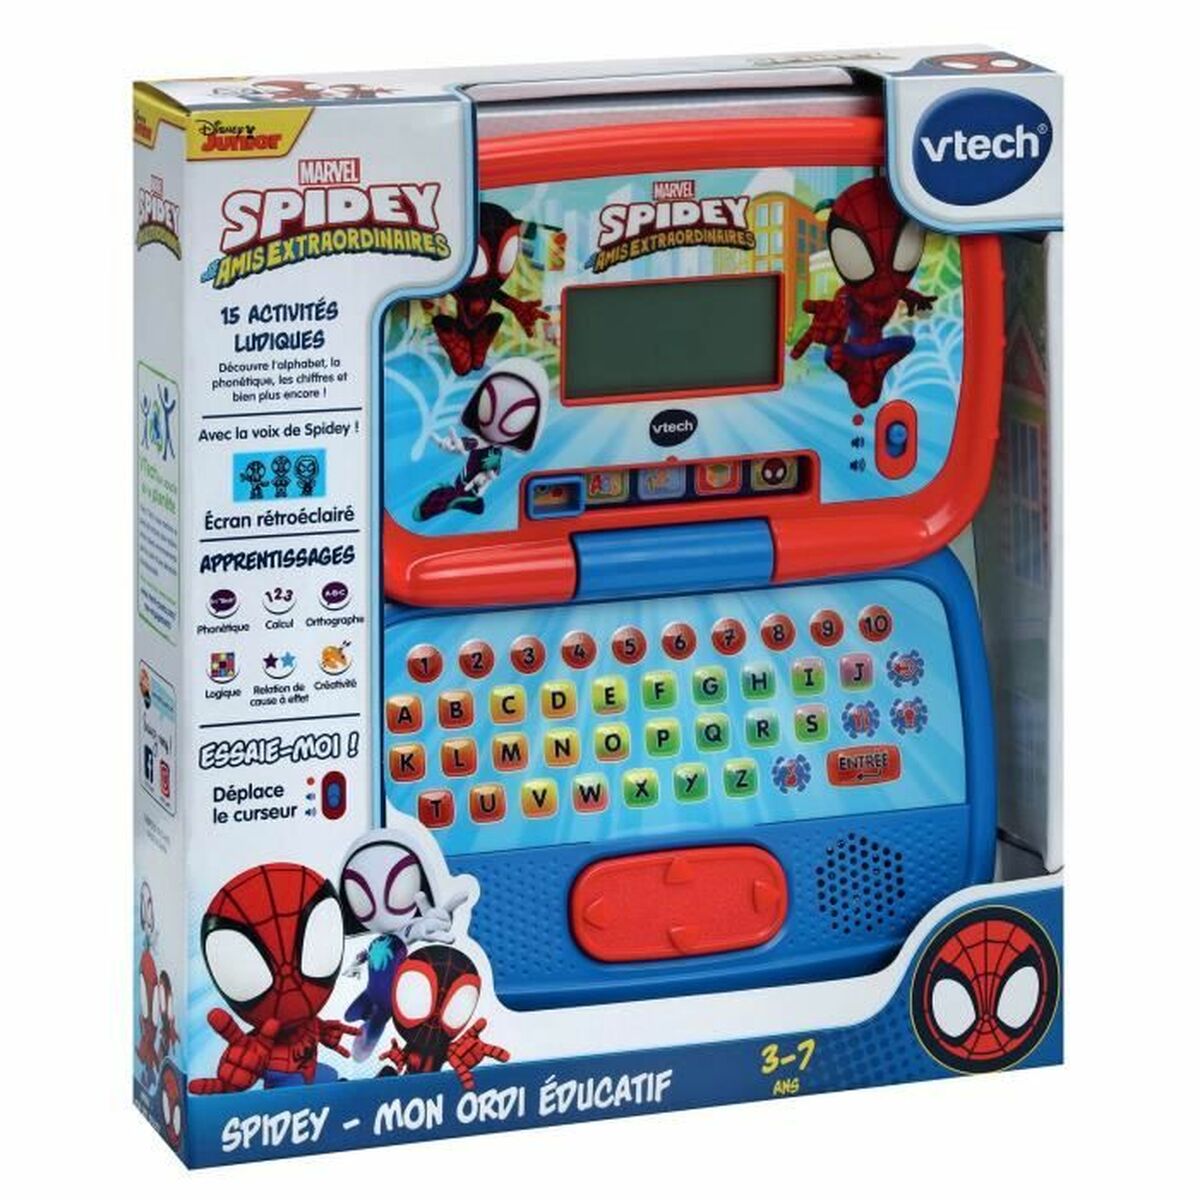 Bērnu rotaļu dators Vtech Spidey - Mon ordi éducatif